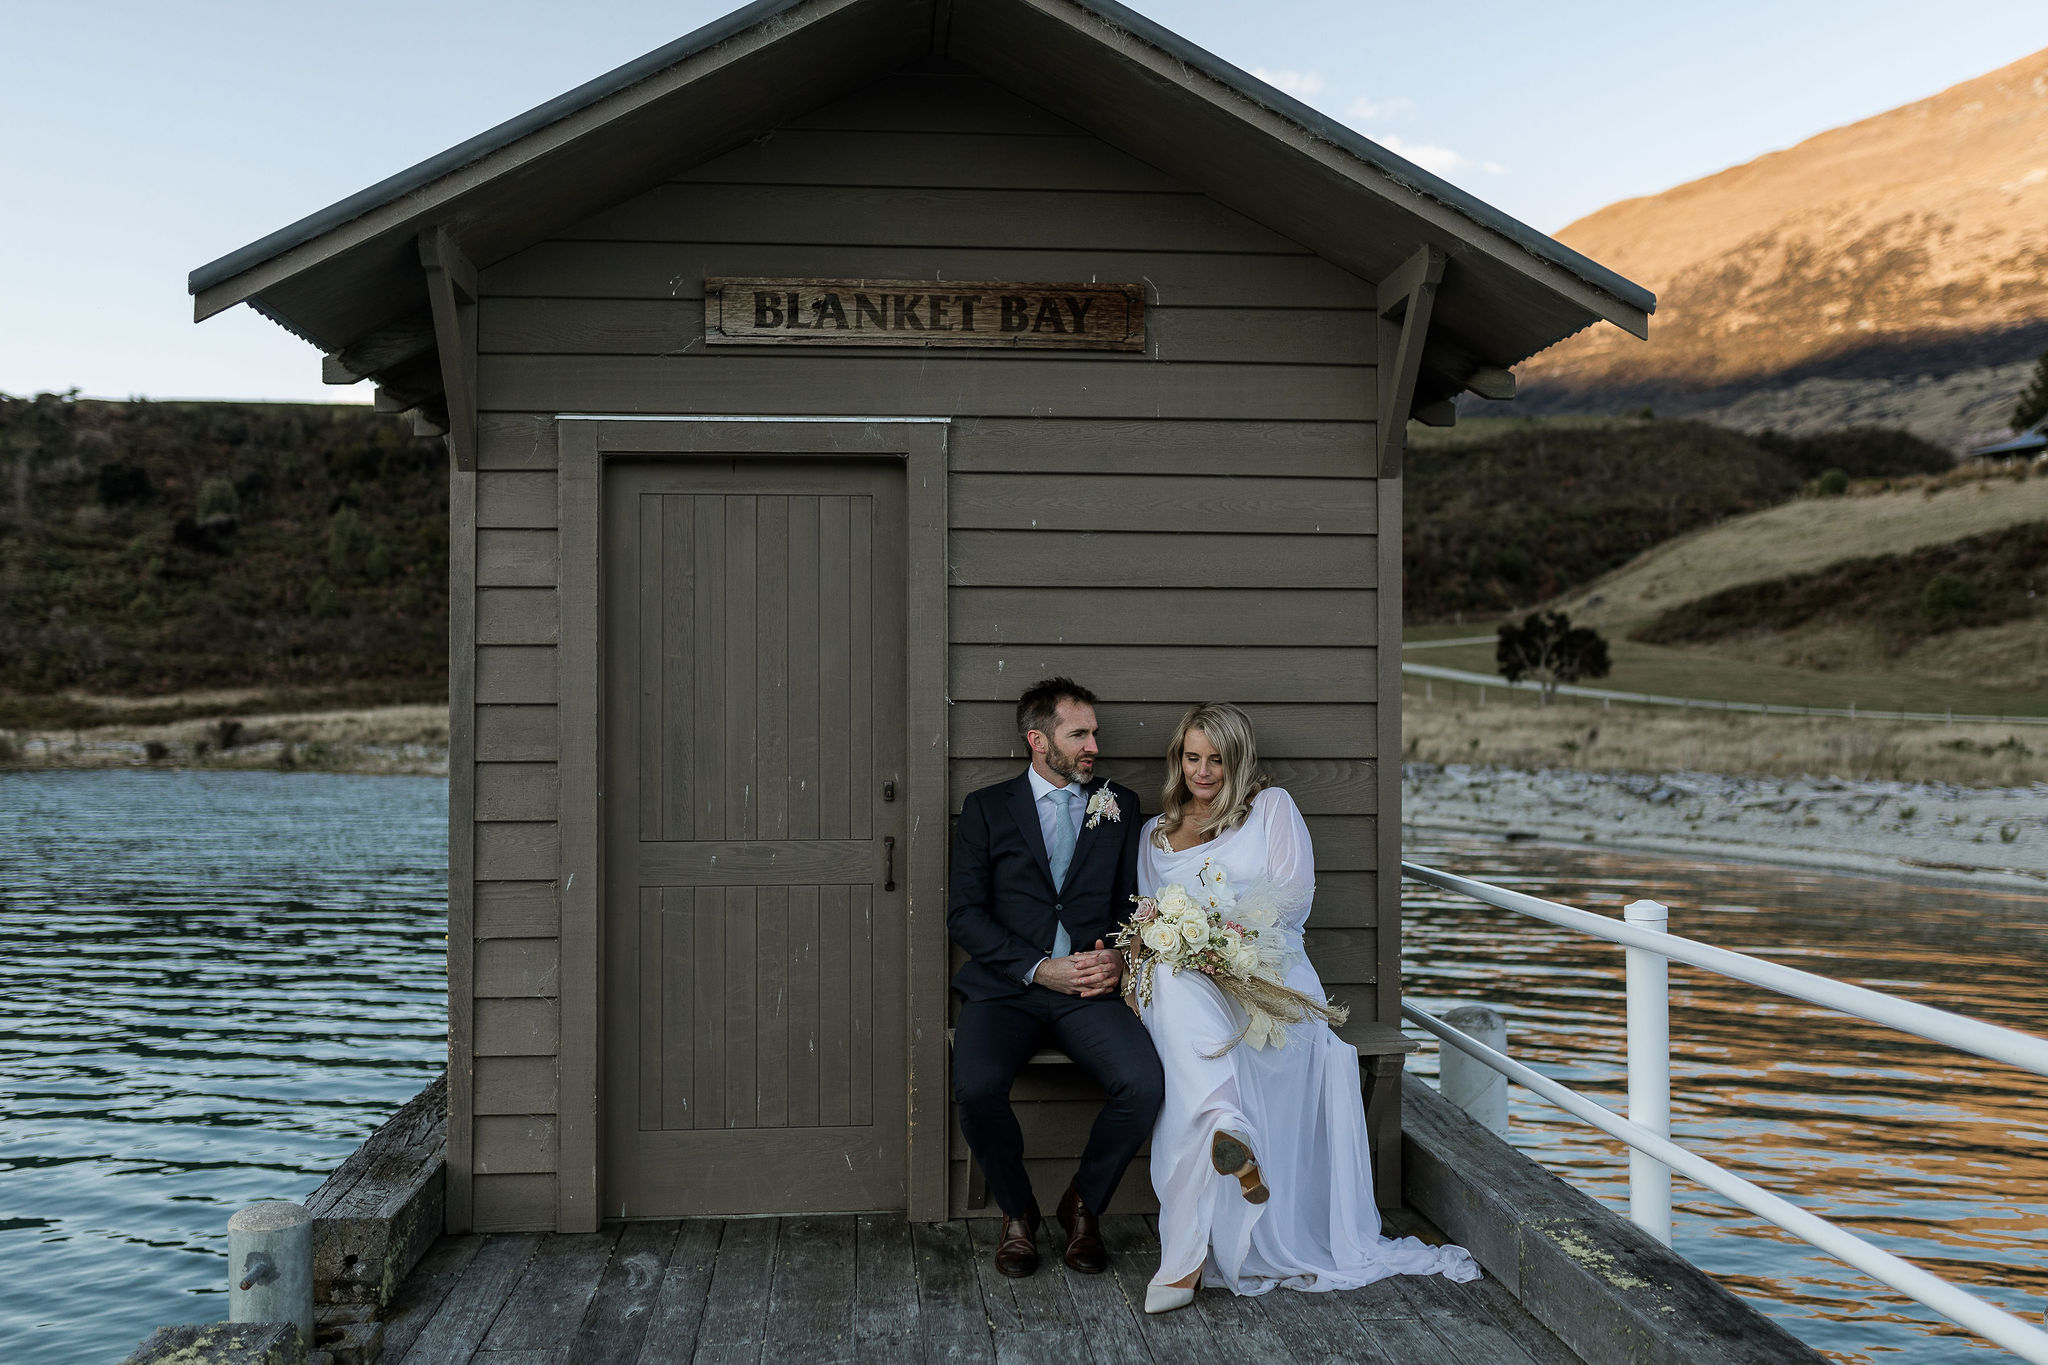 Blanket Bay - Wildly Romantic Weddings & Elopements